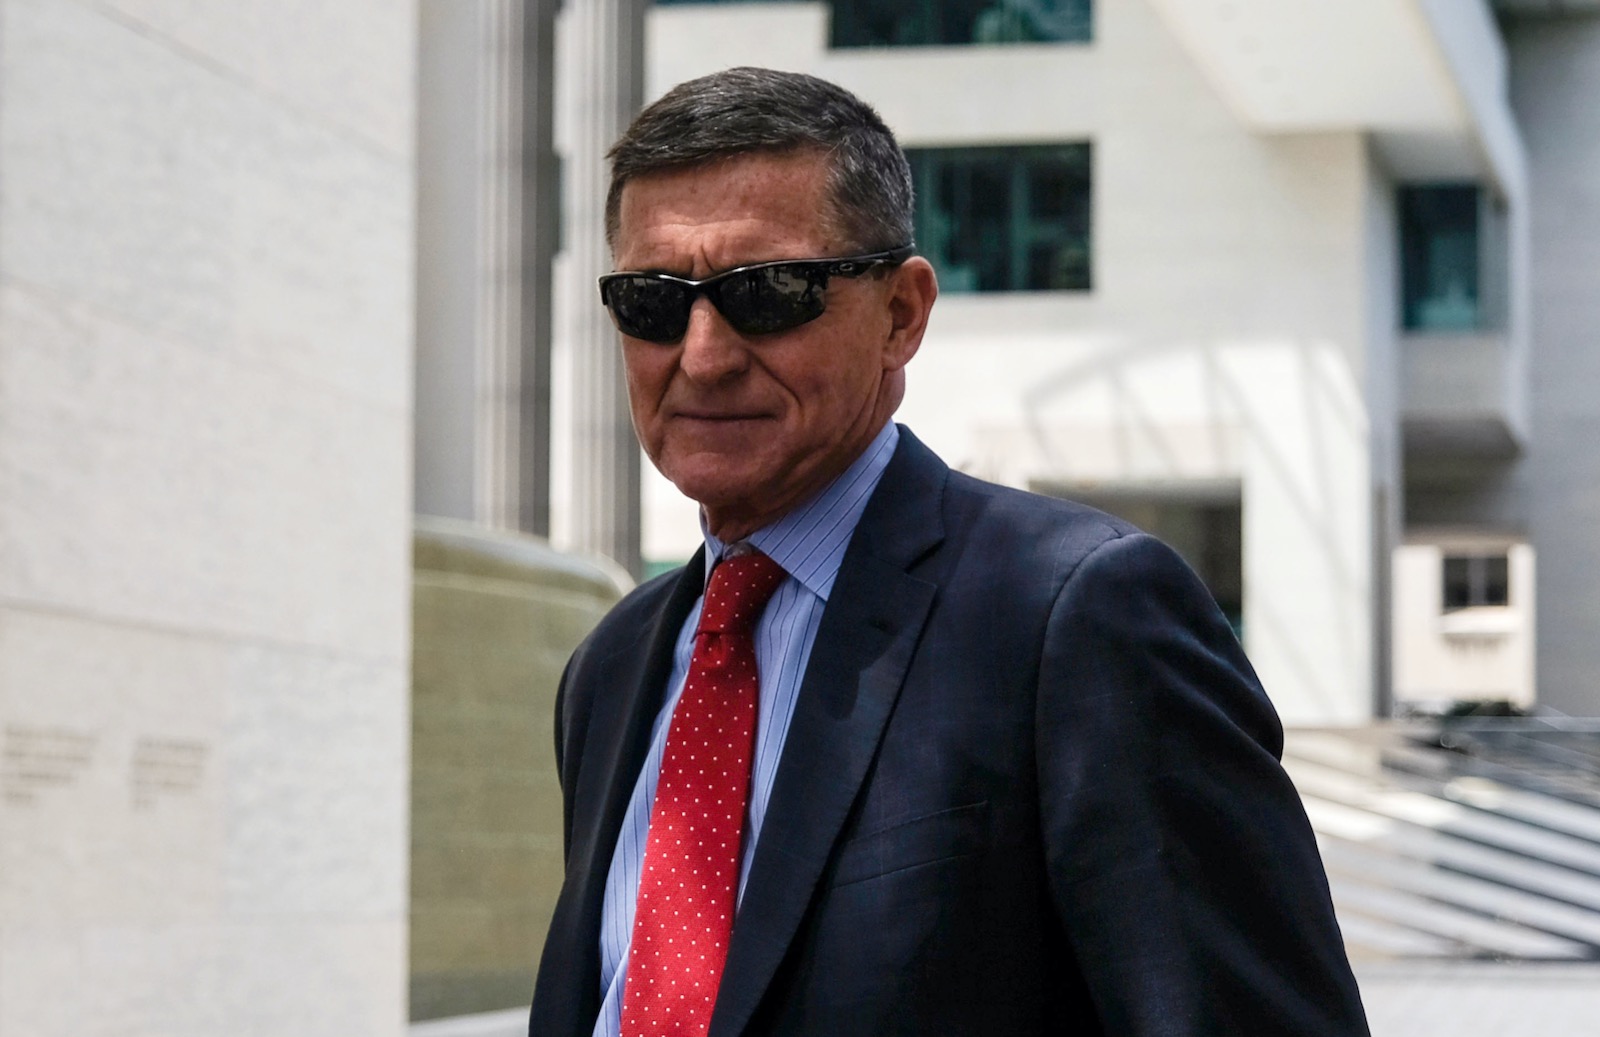 Former National Security Adviser Michael Flynn leaving a court hearing, Washington, D.C., June 24, 2019